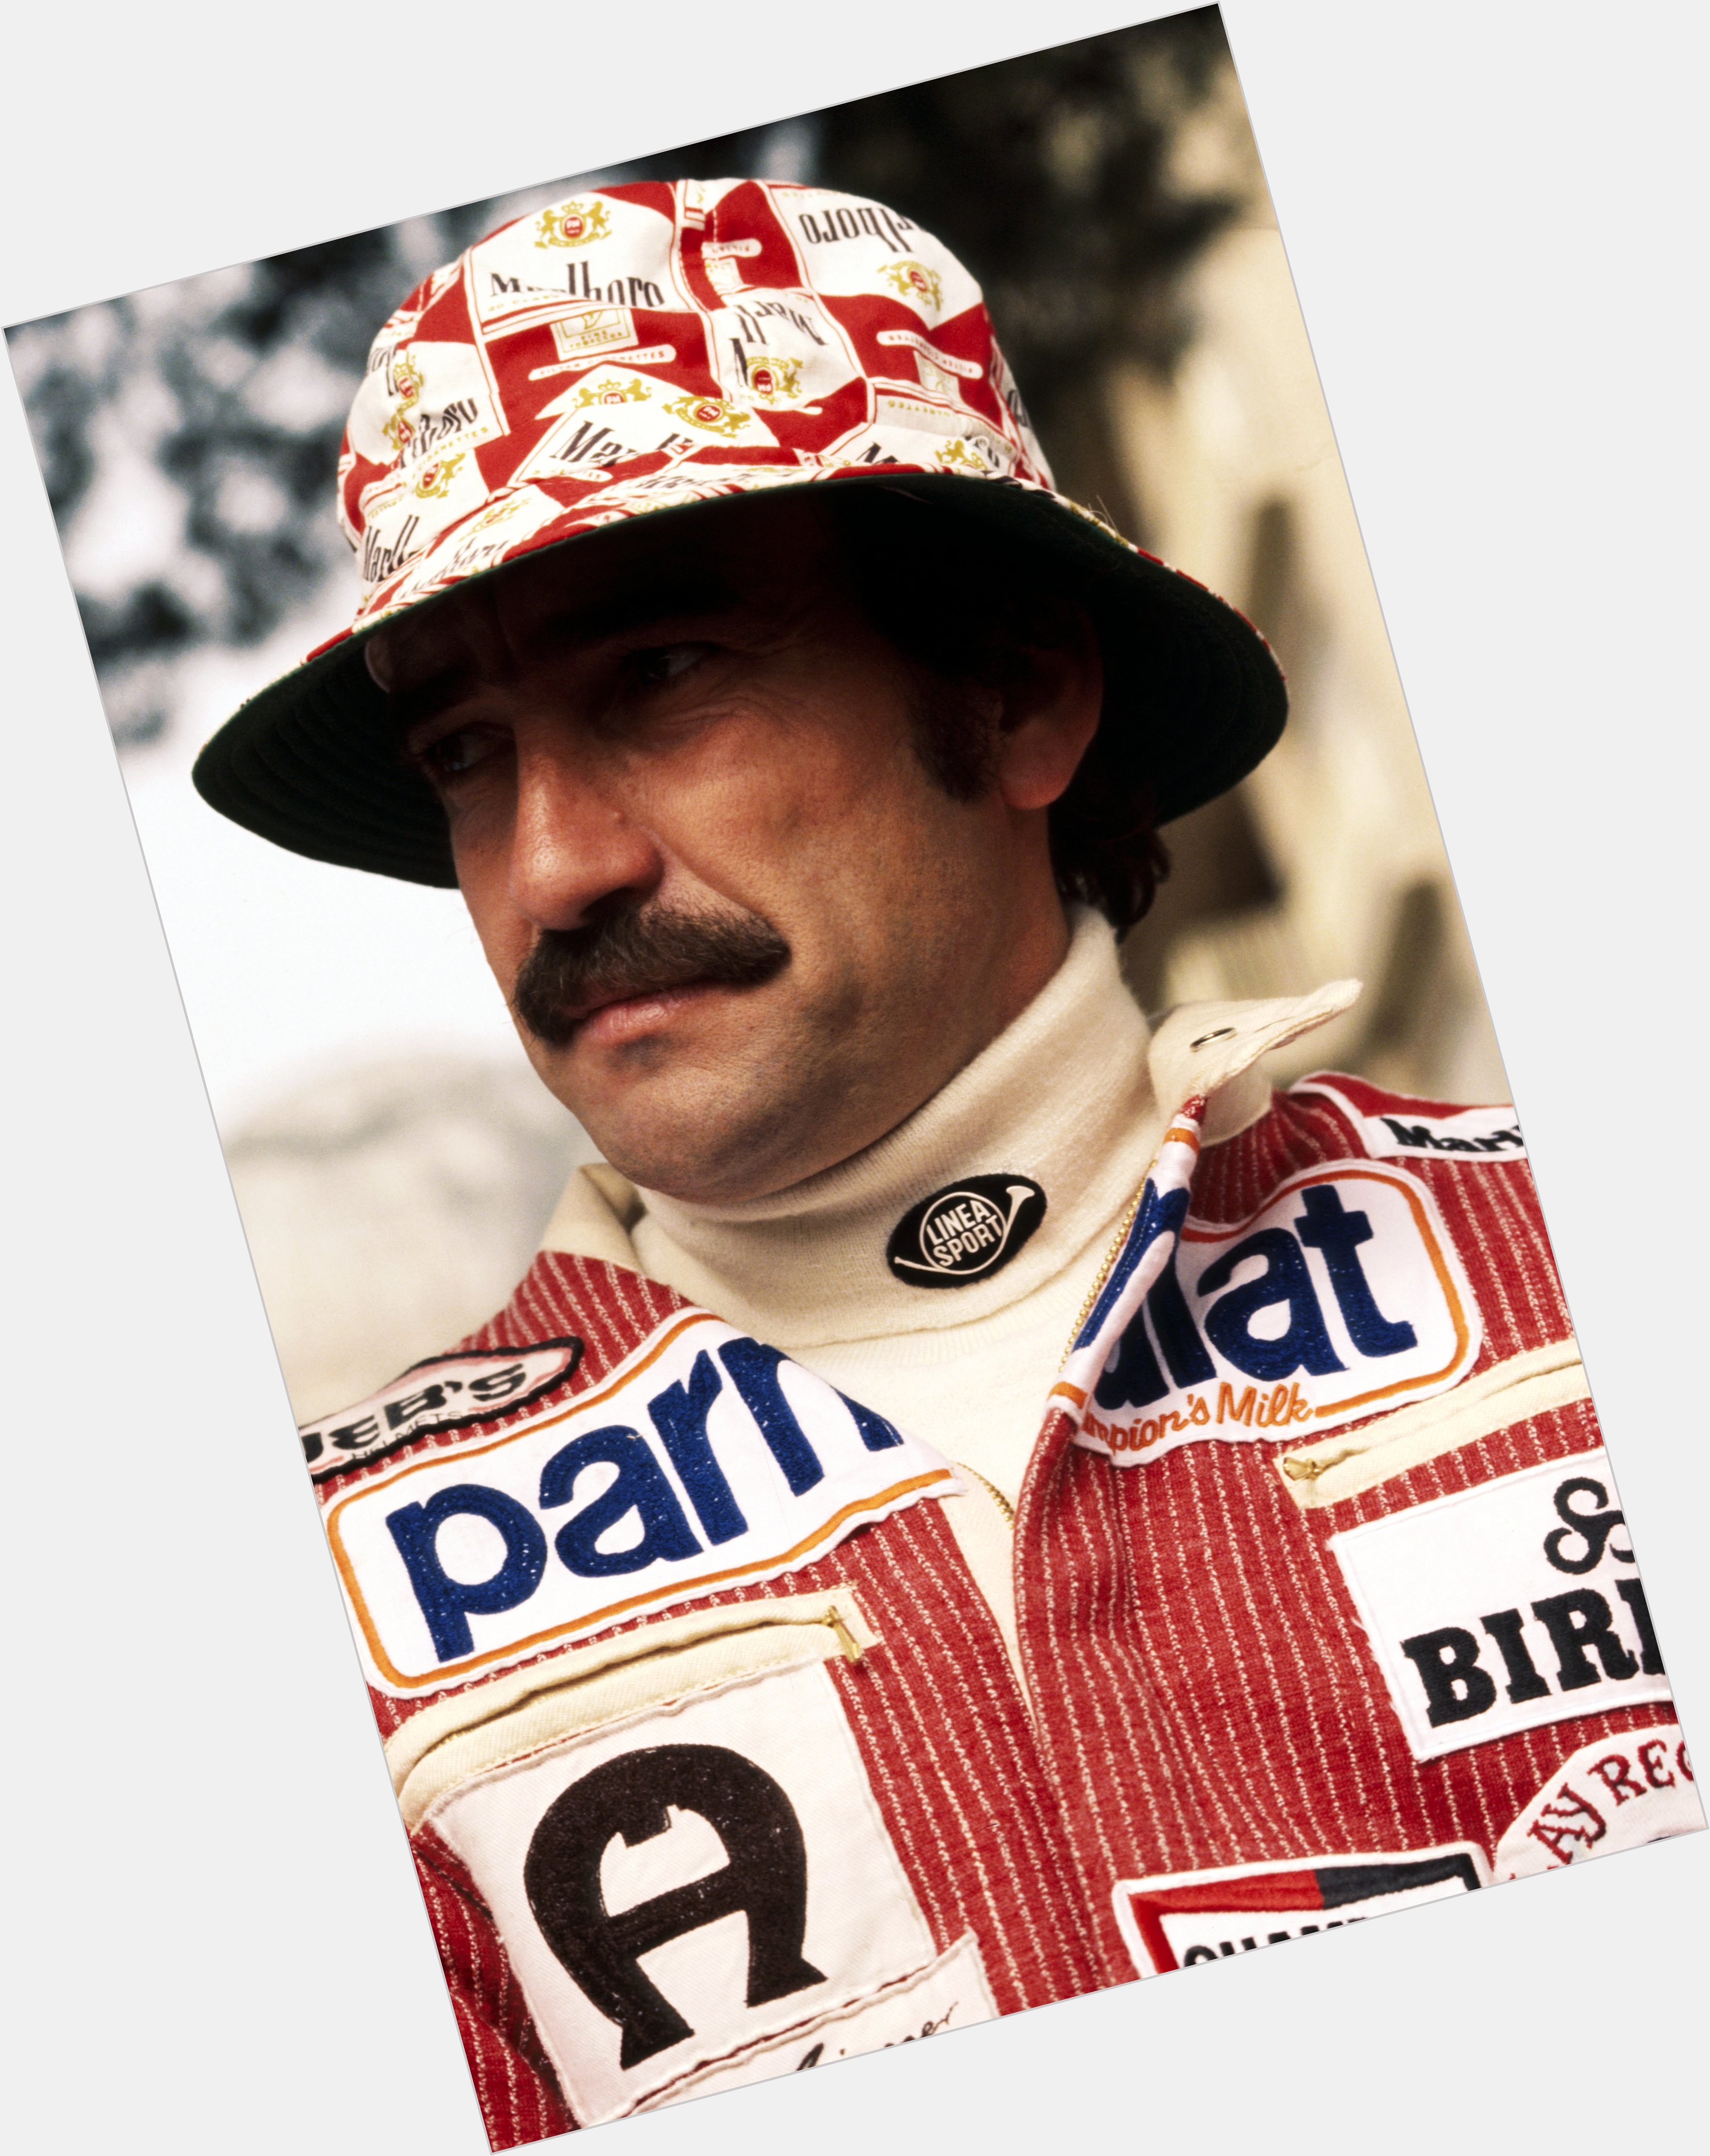 Clay Regazzoni birthday 2015